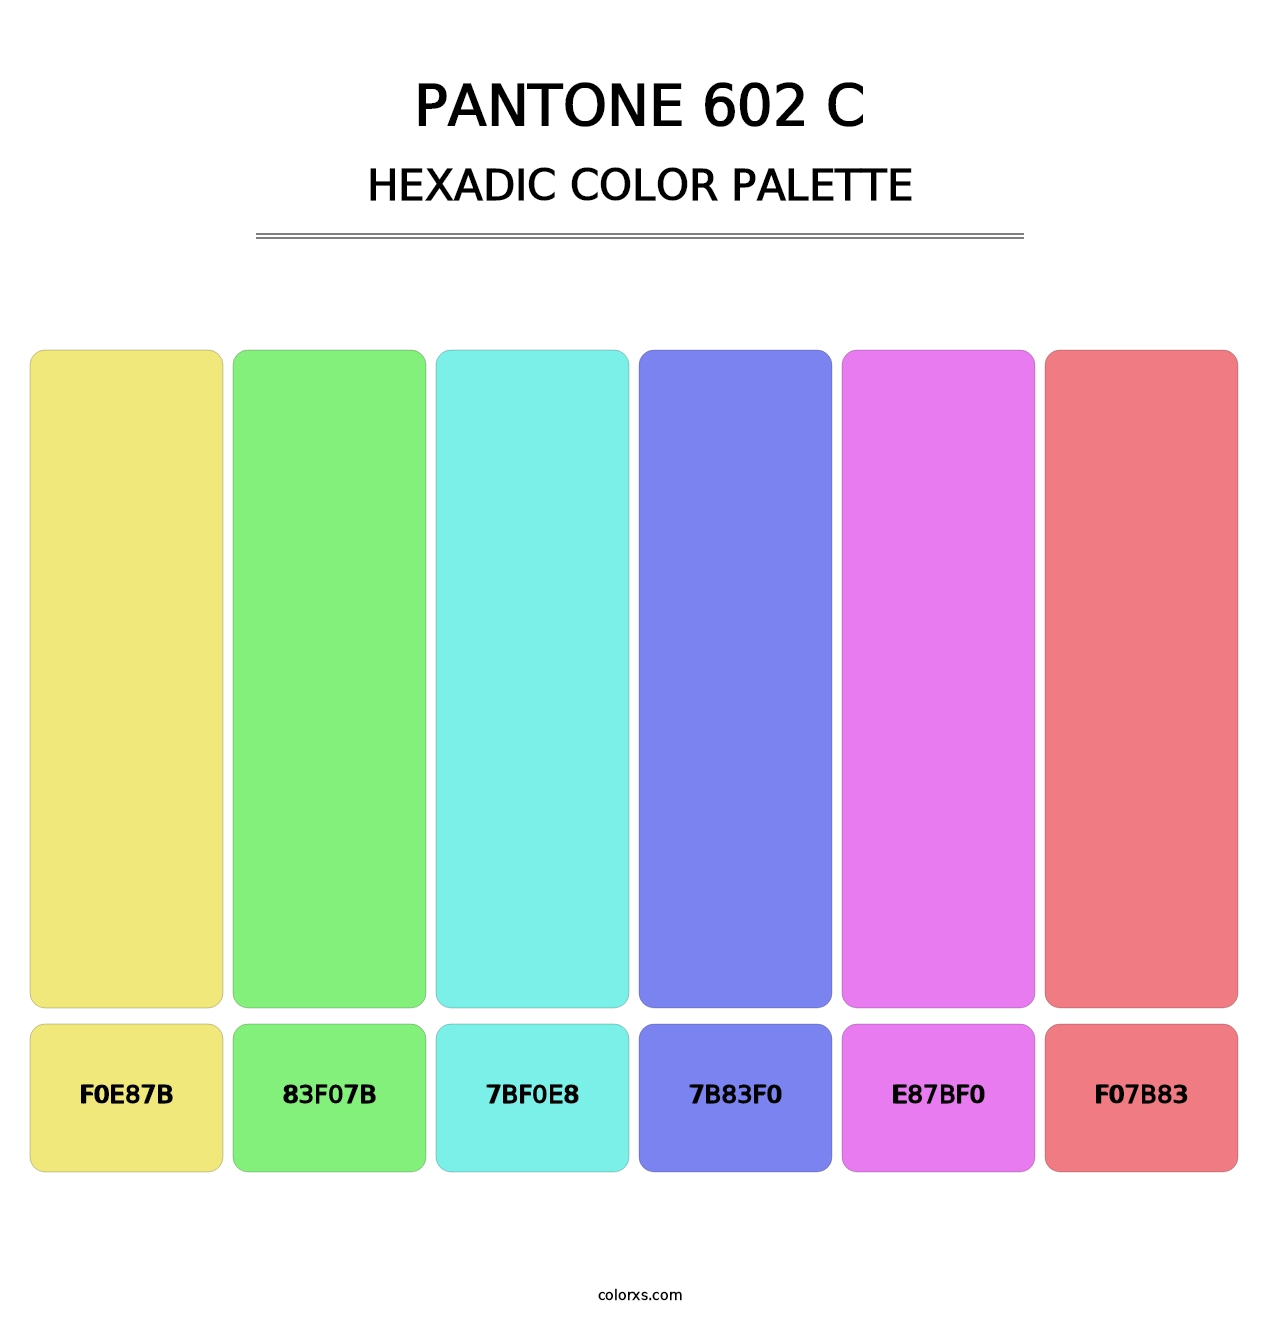 PANTONE 602 C - Hexadic Color Palette